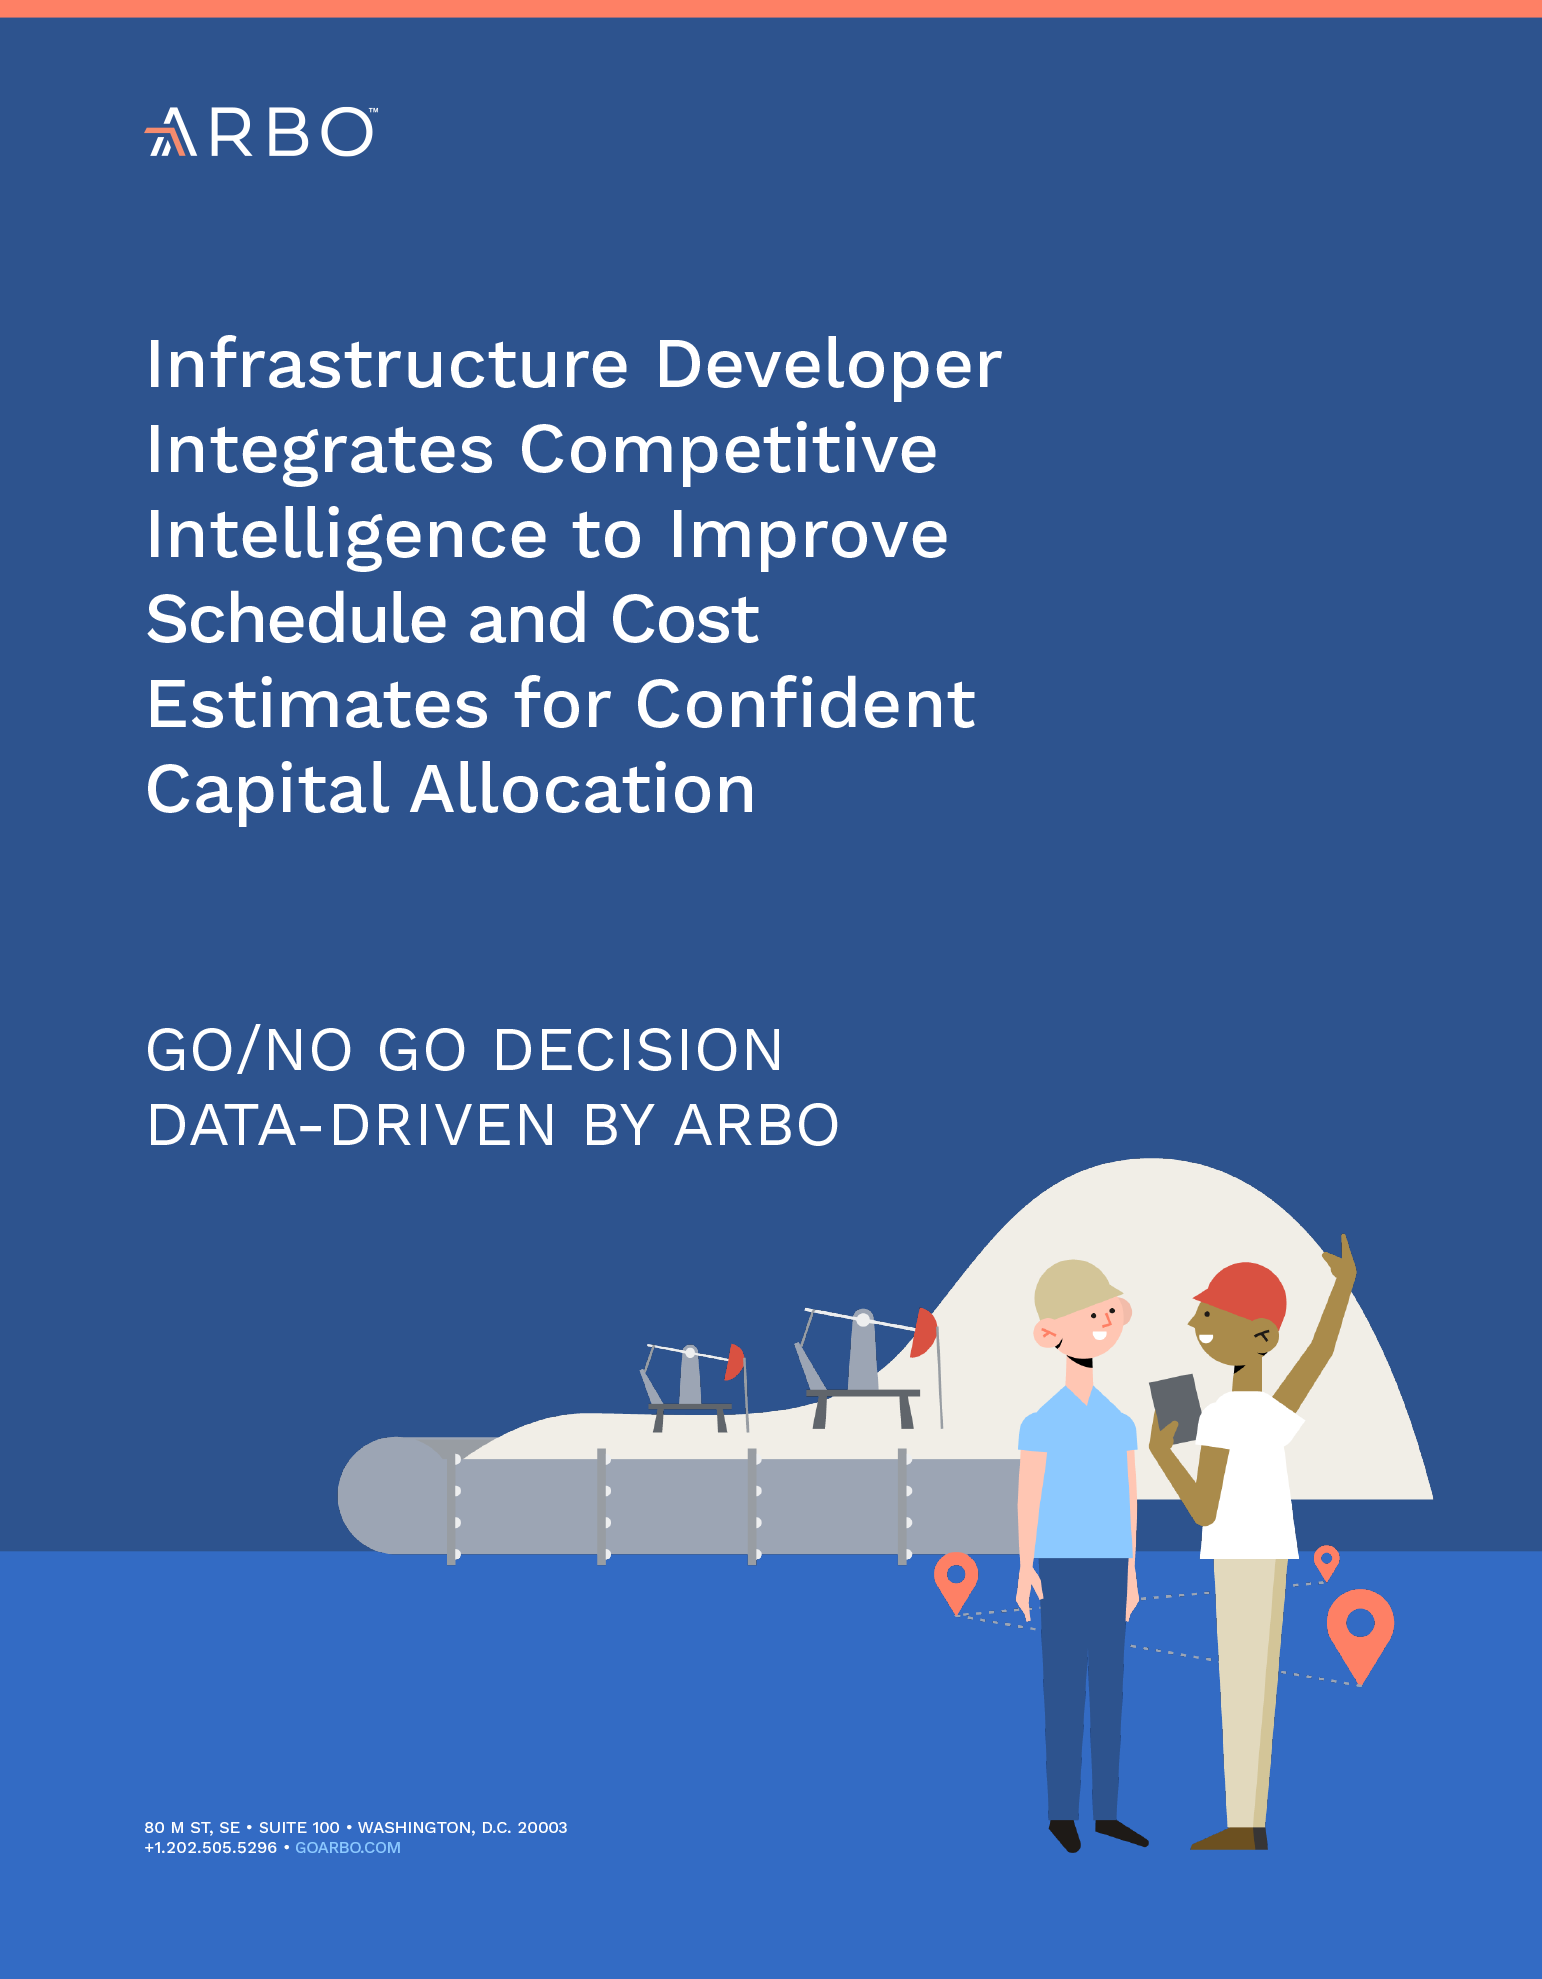 Infrastructure Developer integrates competitive intelligence